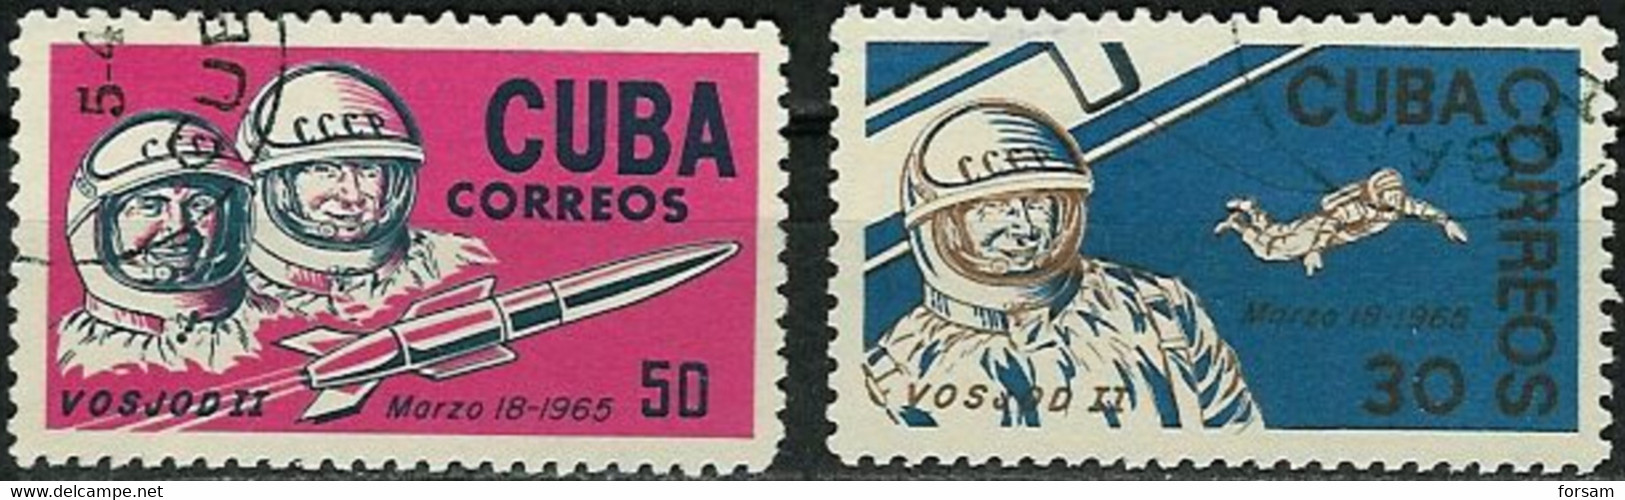 CUBA..1965..Michel # 1008-1009..used...MiCV - 2.60 Euro. - Used Stamps